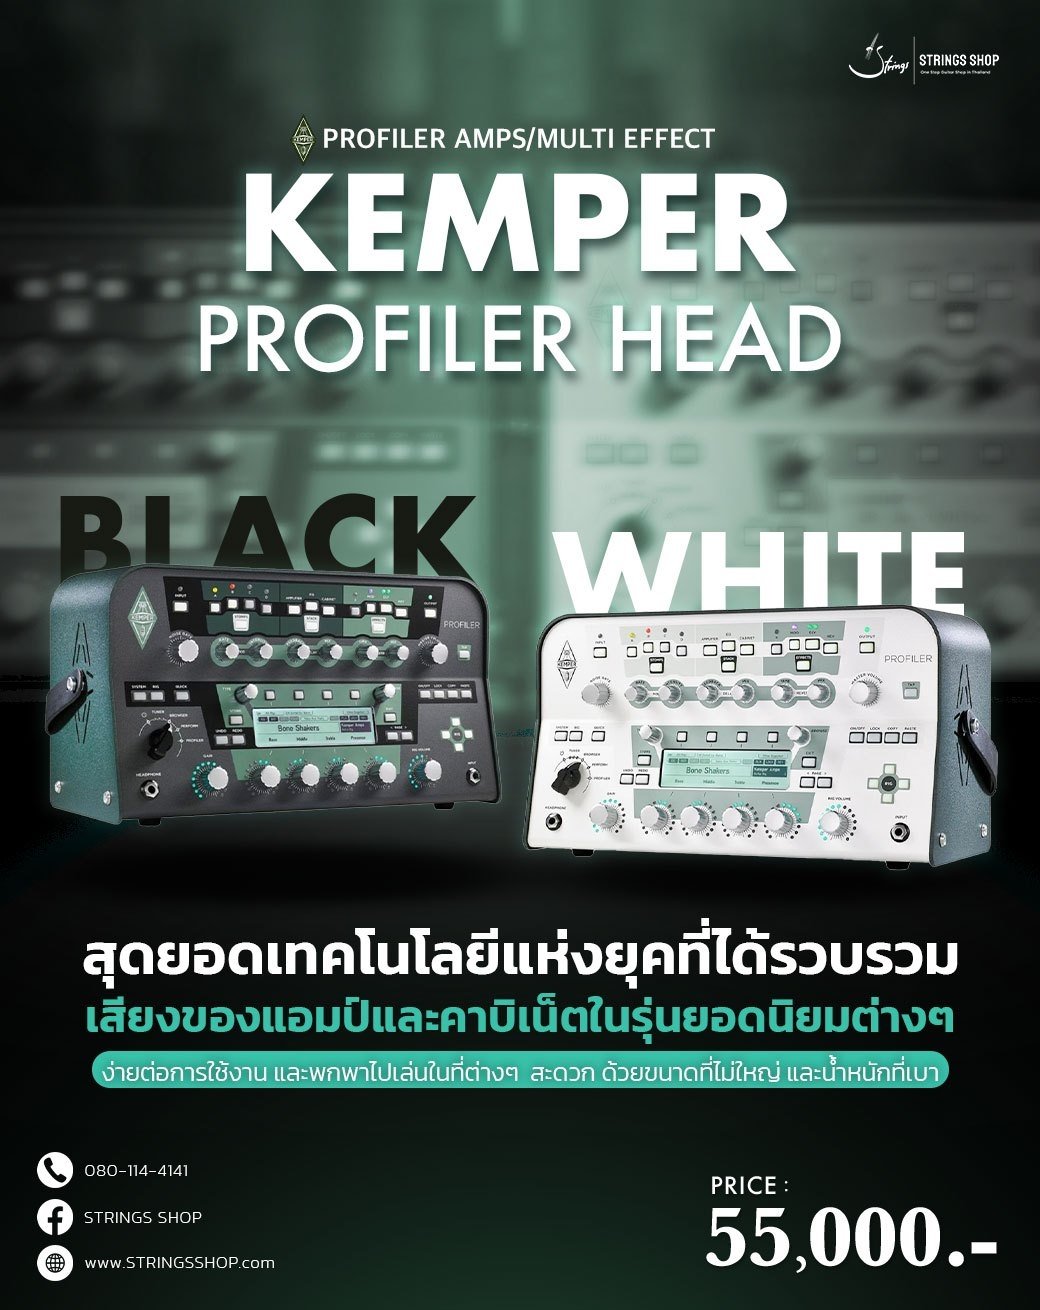  KEMPER PROFILER HEAD